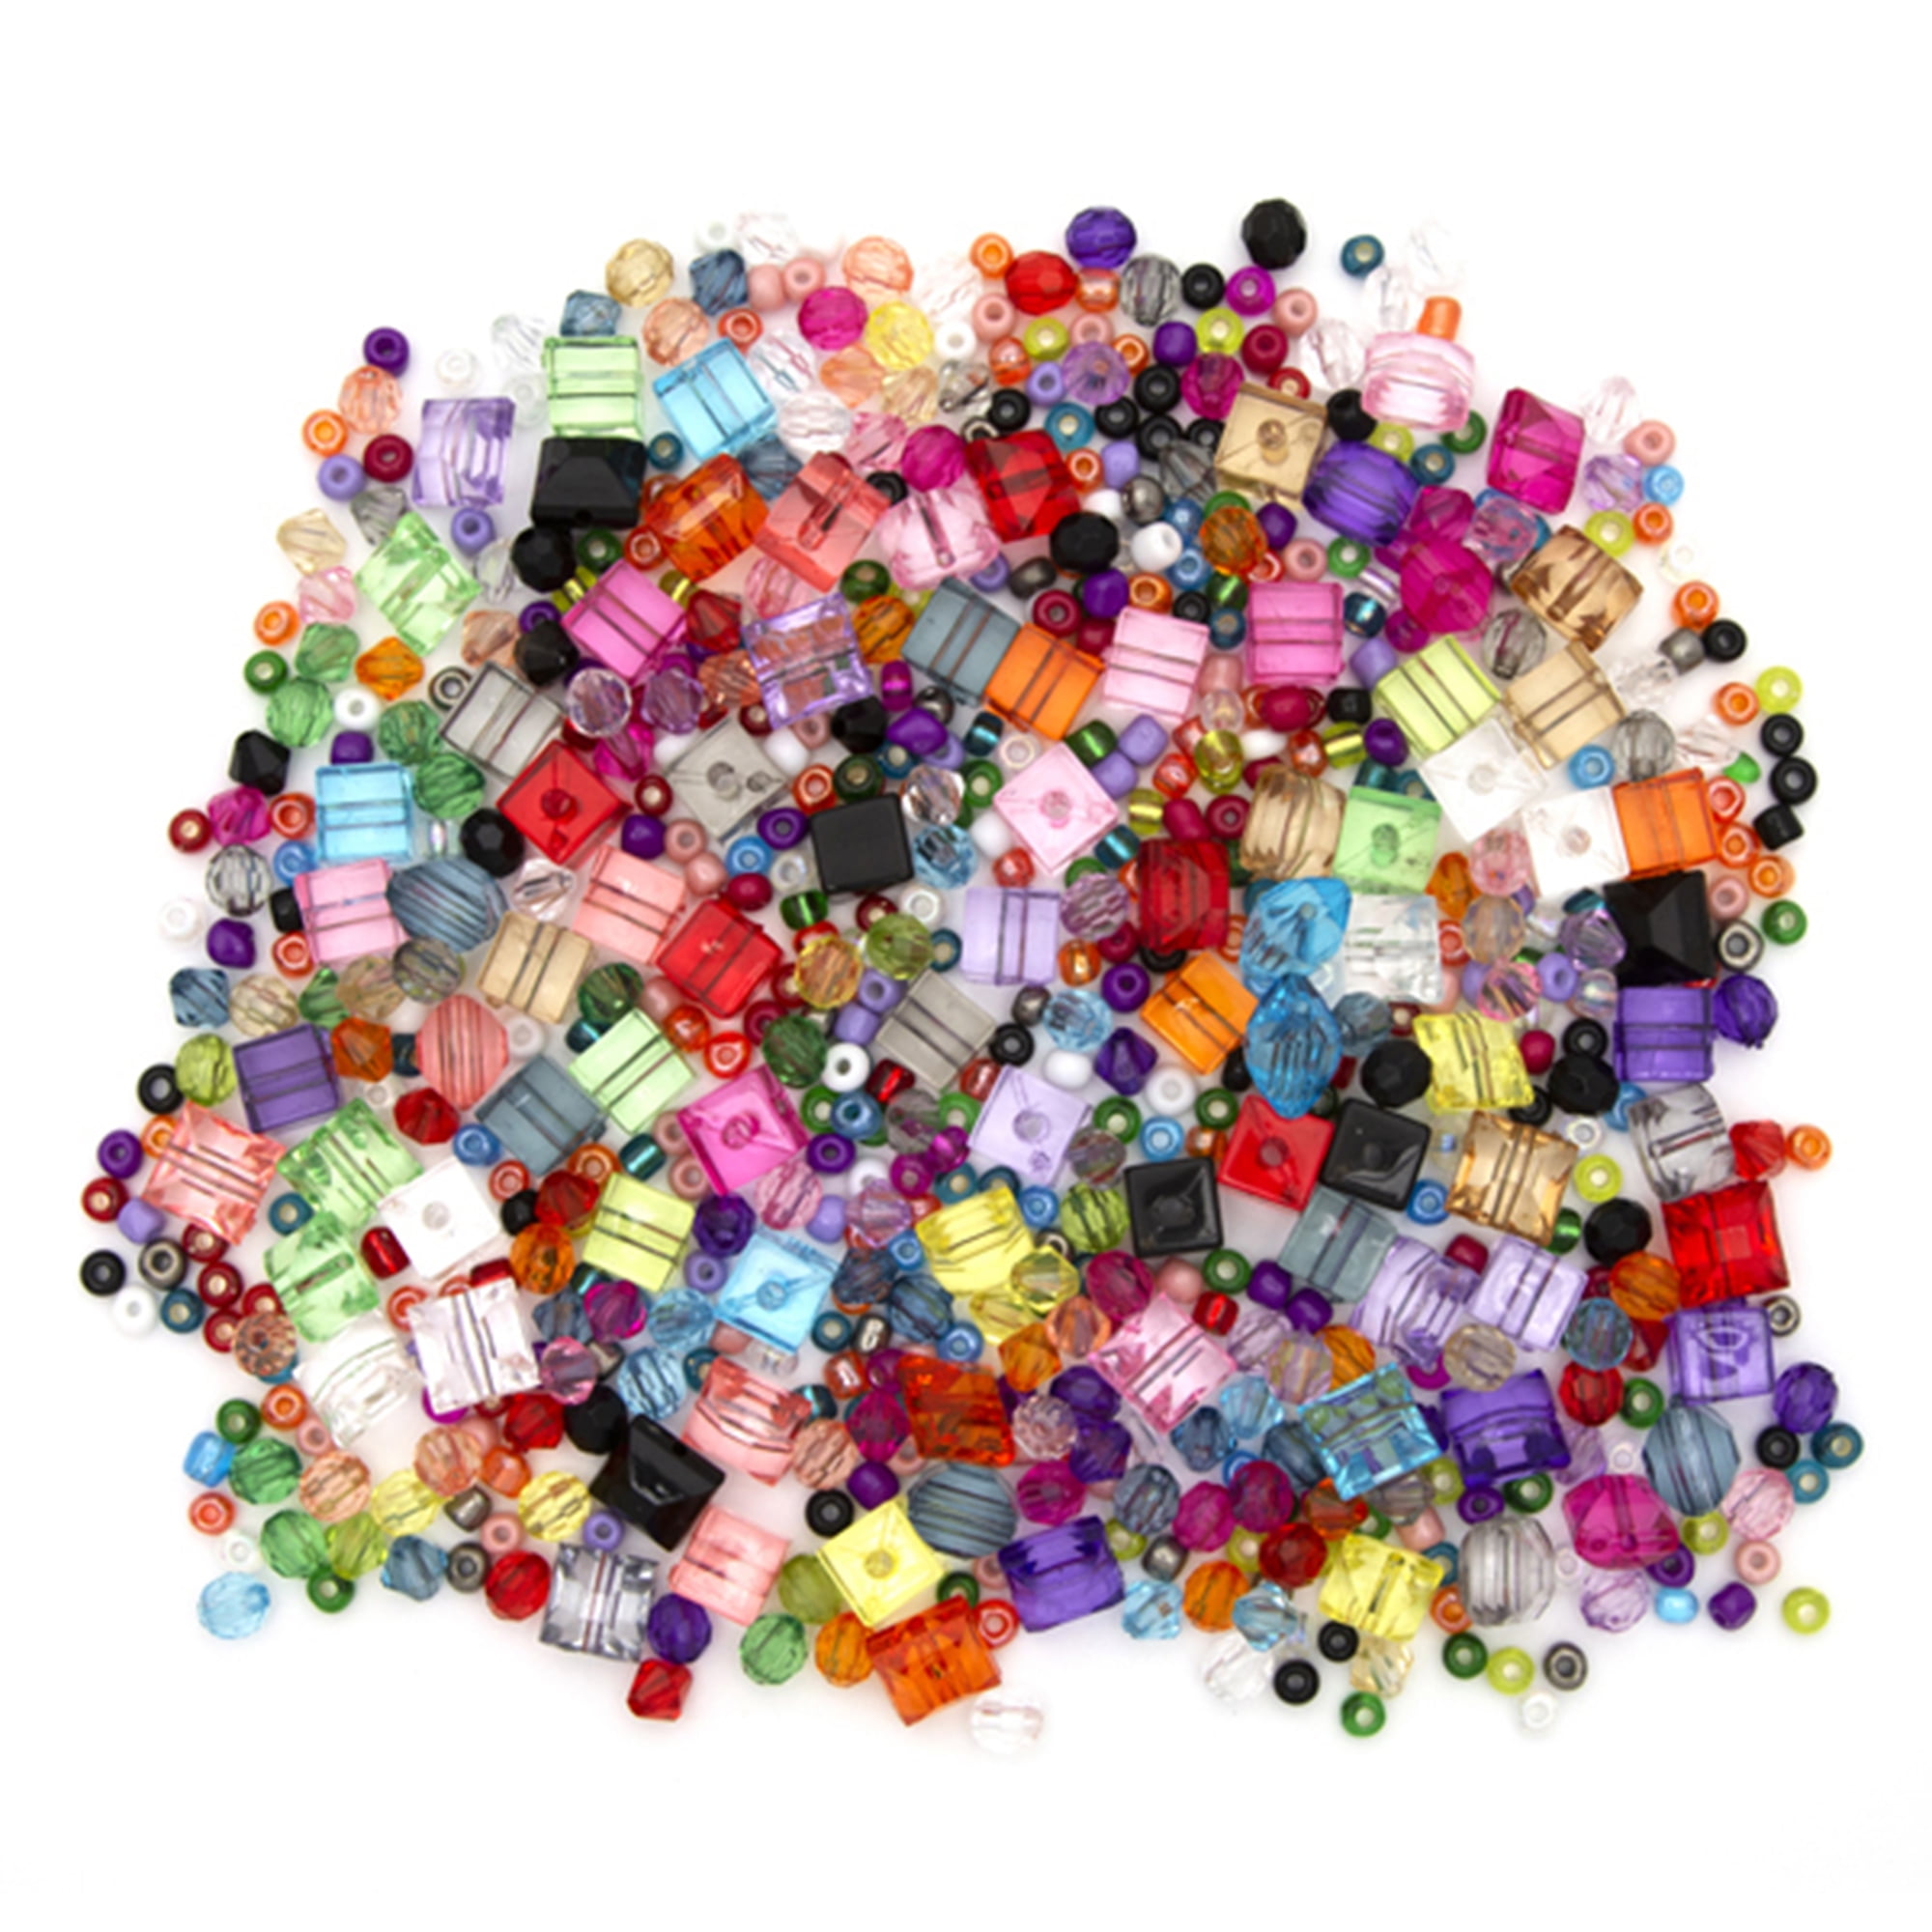 Cousin Fun Pack Acrylic Alphabet Beads 85/Pkg-Square Rainbow, 1